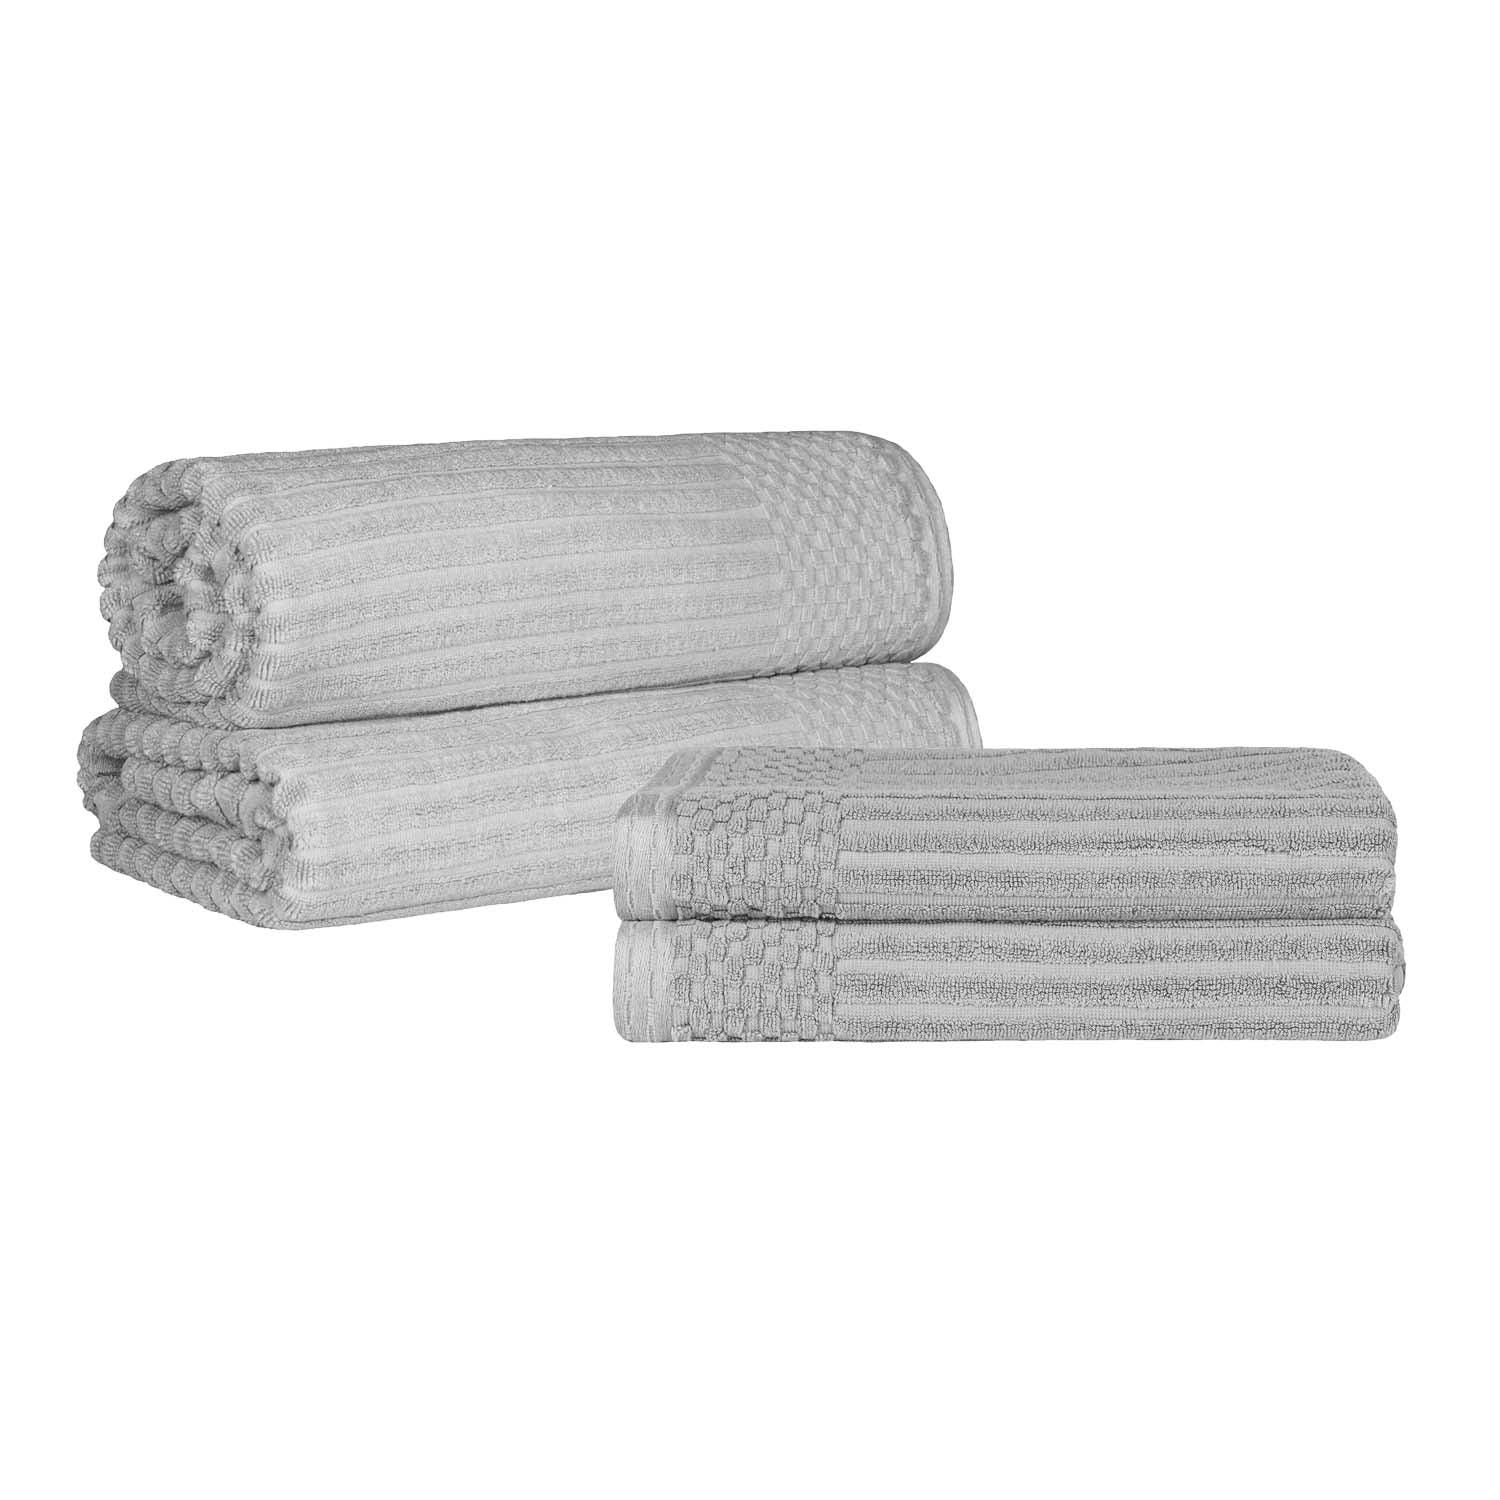  Superior Soho Ribbed Textured Cotton Ultra-Absorbent Bath Sheet & Bath Towel Set - Silver